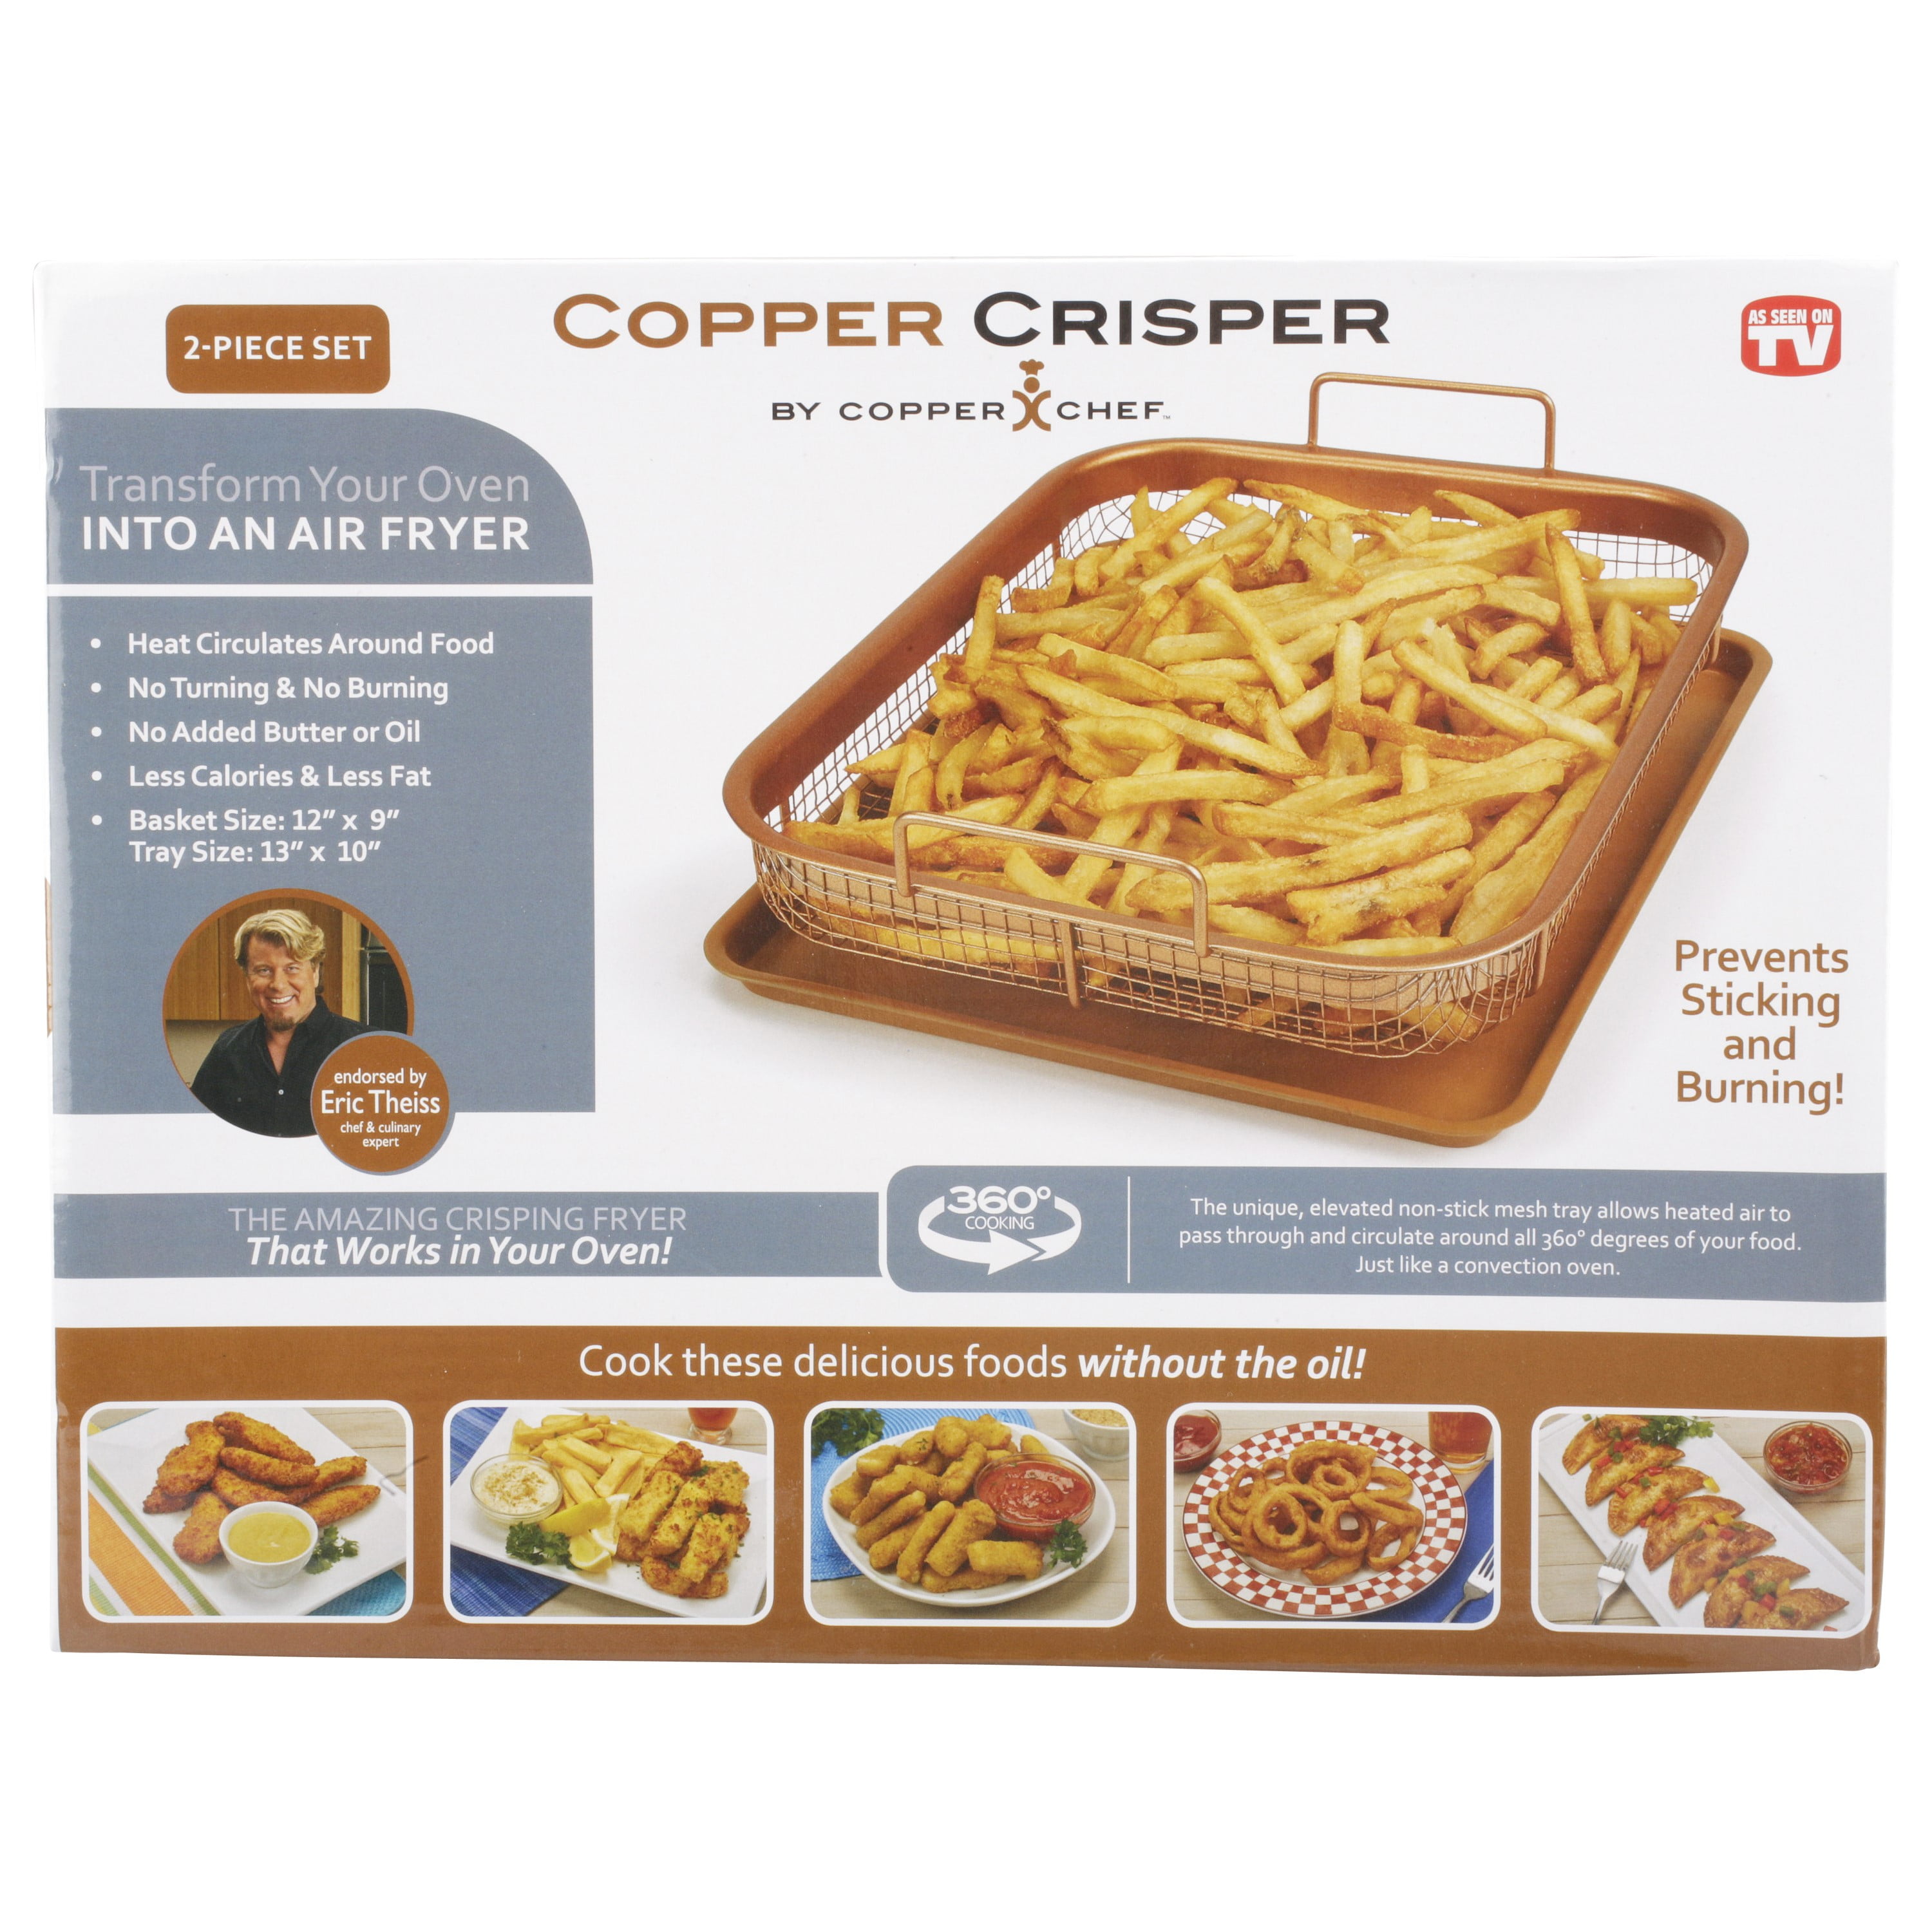 copper chef crisper instructions